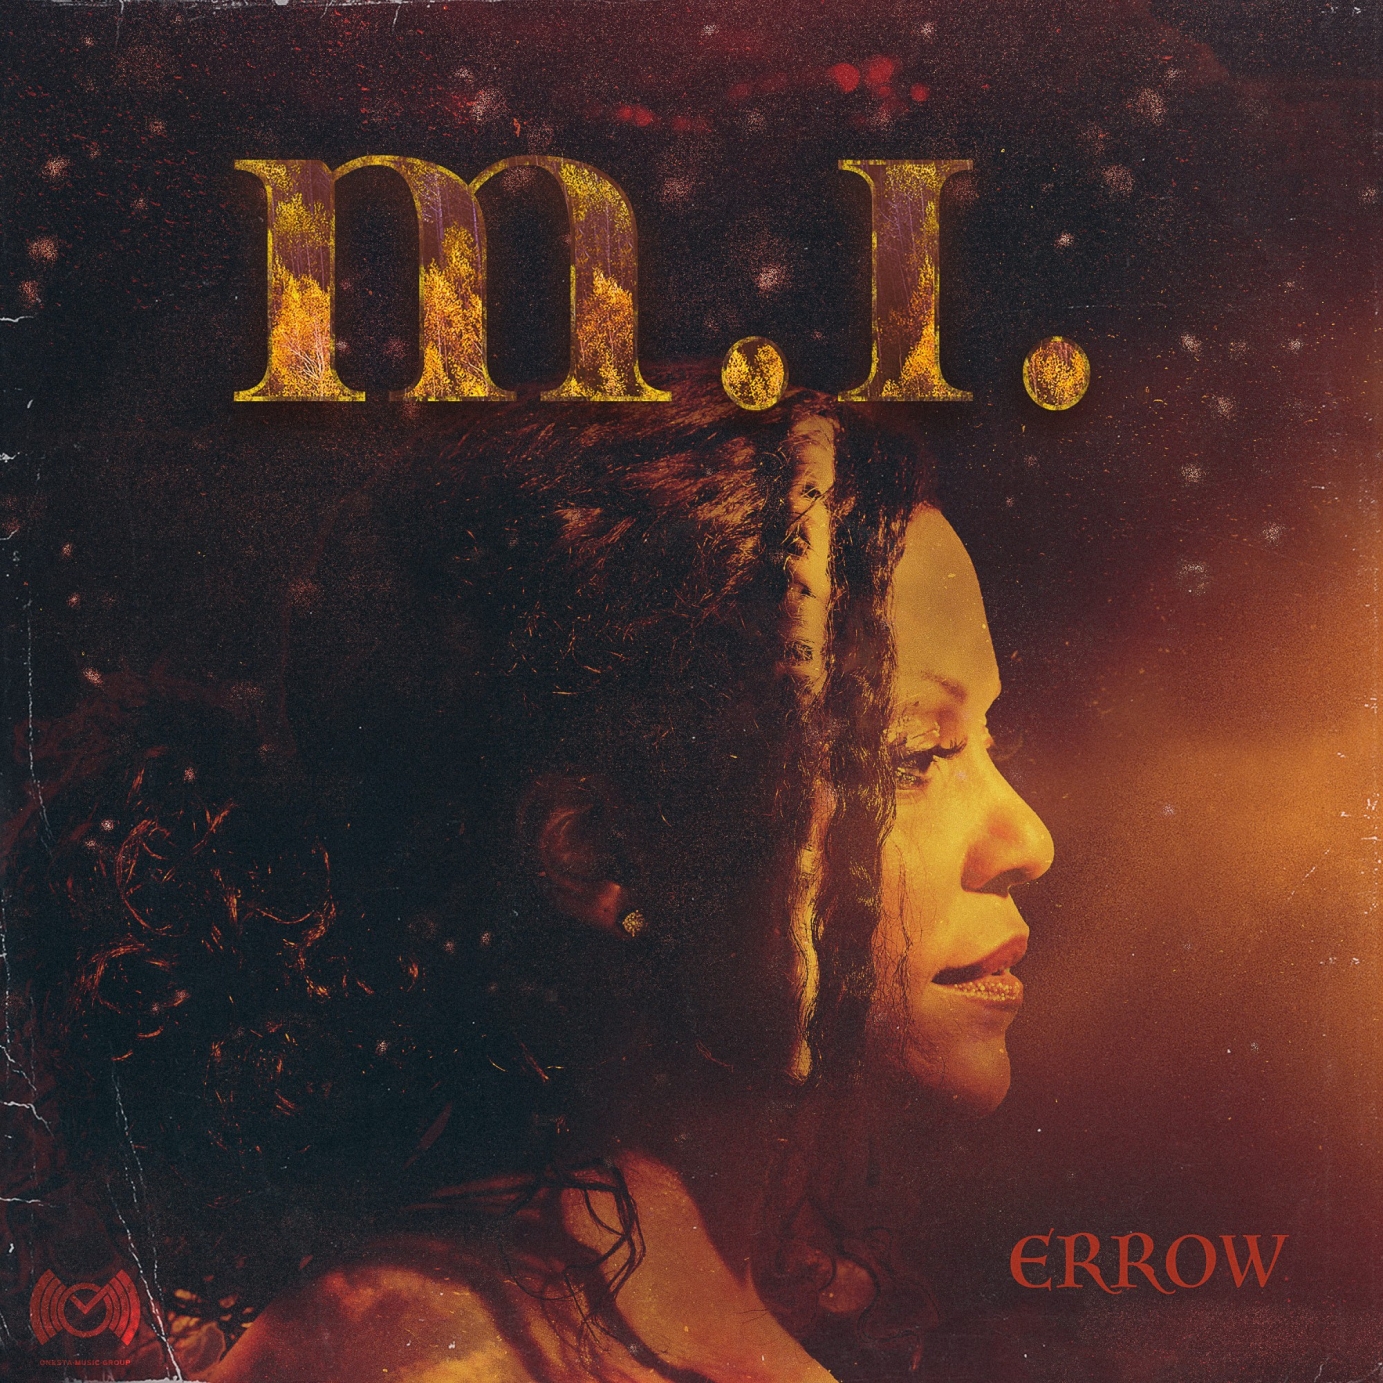 Single Cover Art "M.I." (Mistaken Identity) by errow